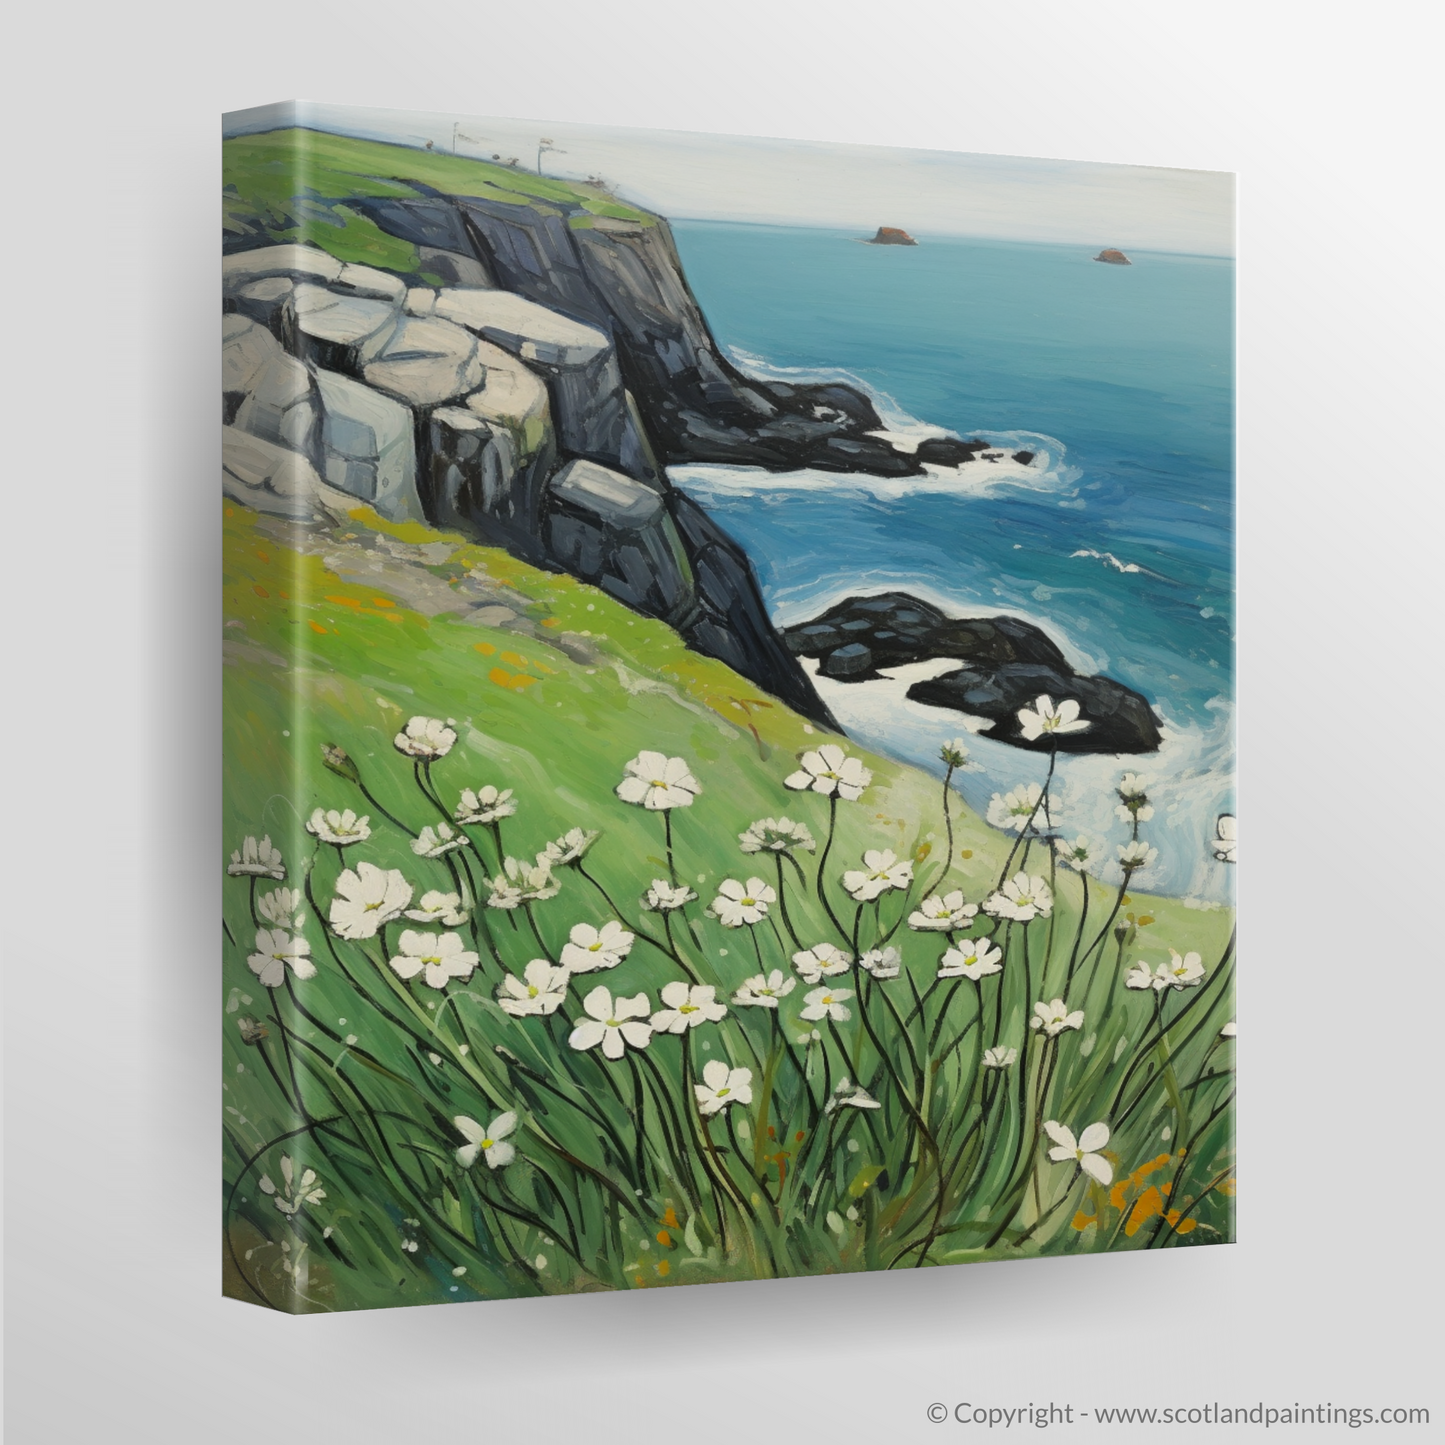 Sea Campion on the Cliffs of Cape Wrath: A Naive Art Homage to Scottish Coastal Splendor